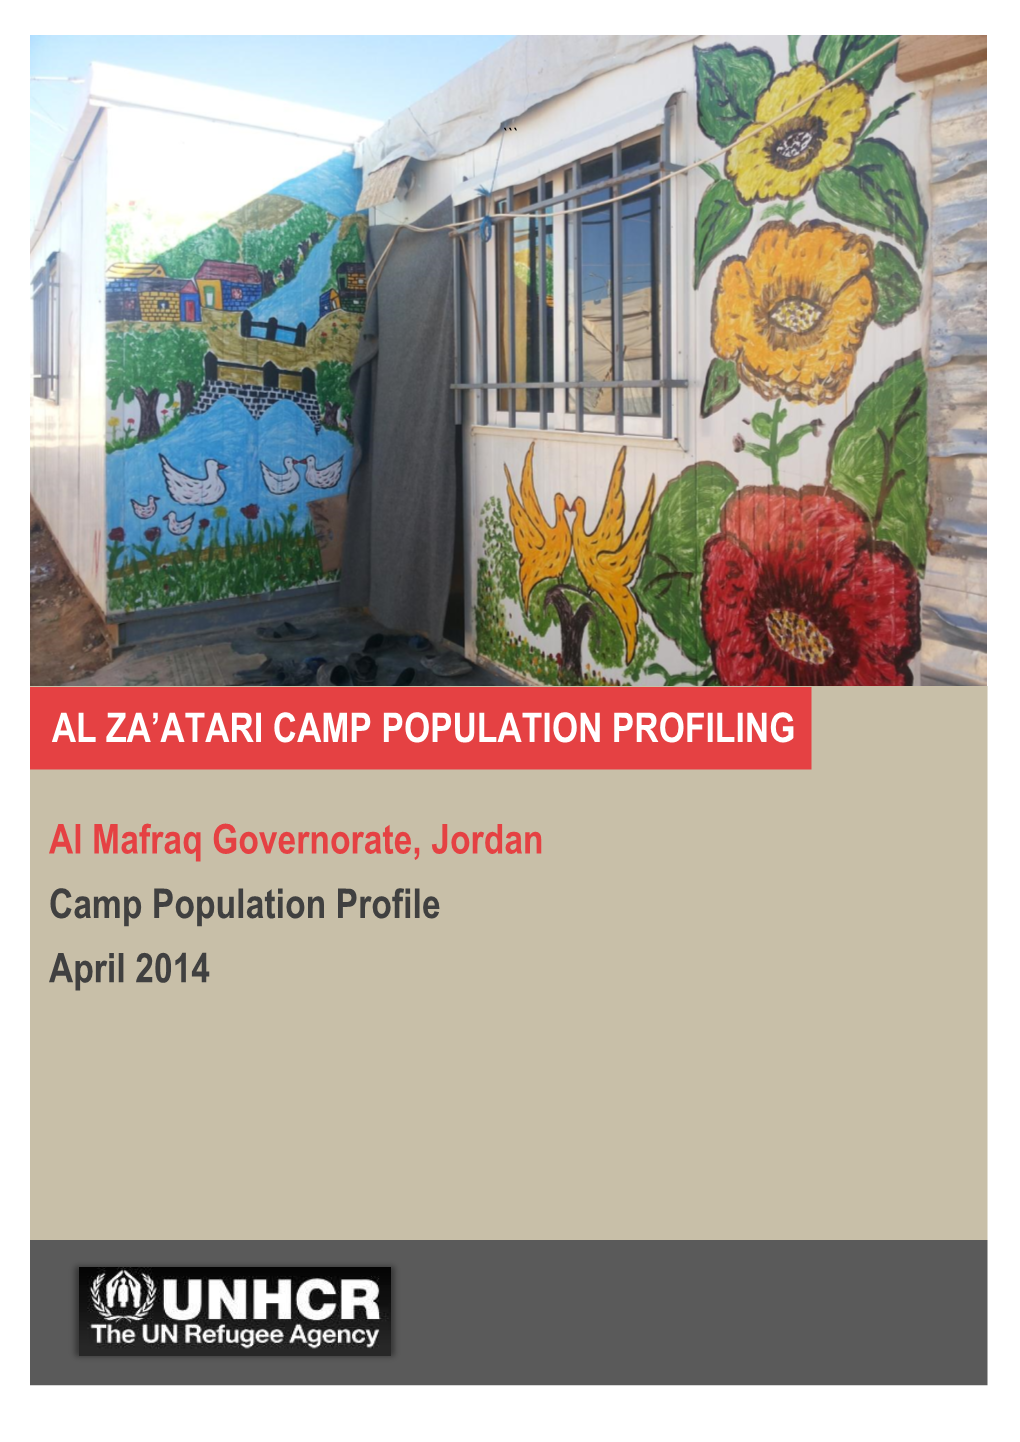 Al Za'atari Camp Population Profiling